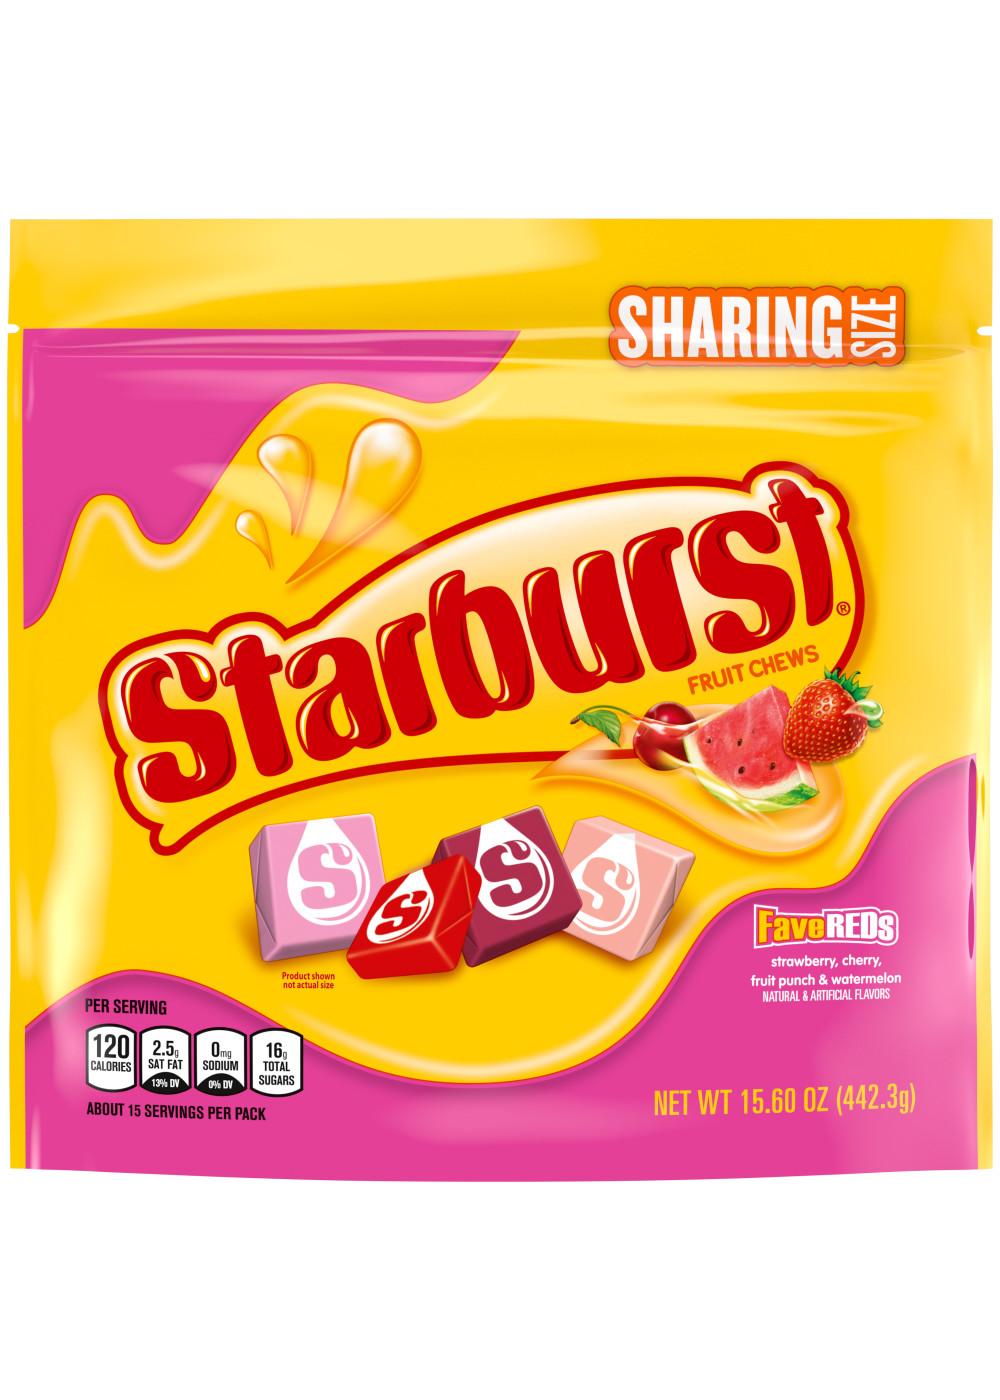 Starburst FaveReds Fruit Chews Candy - Sharing Size; image 4 of 10